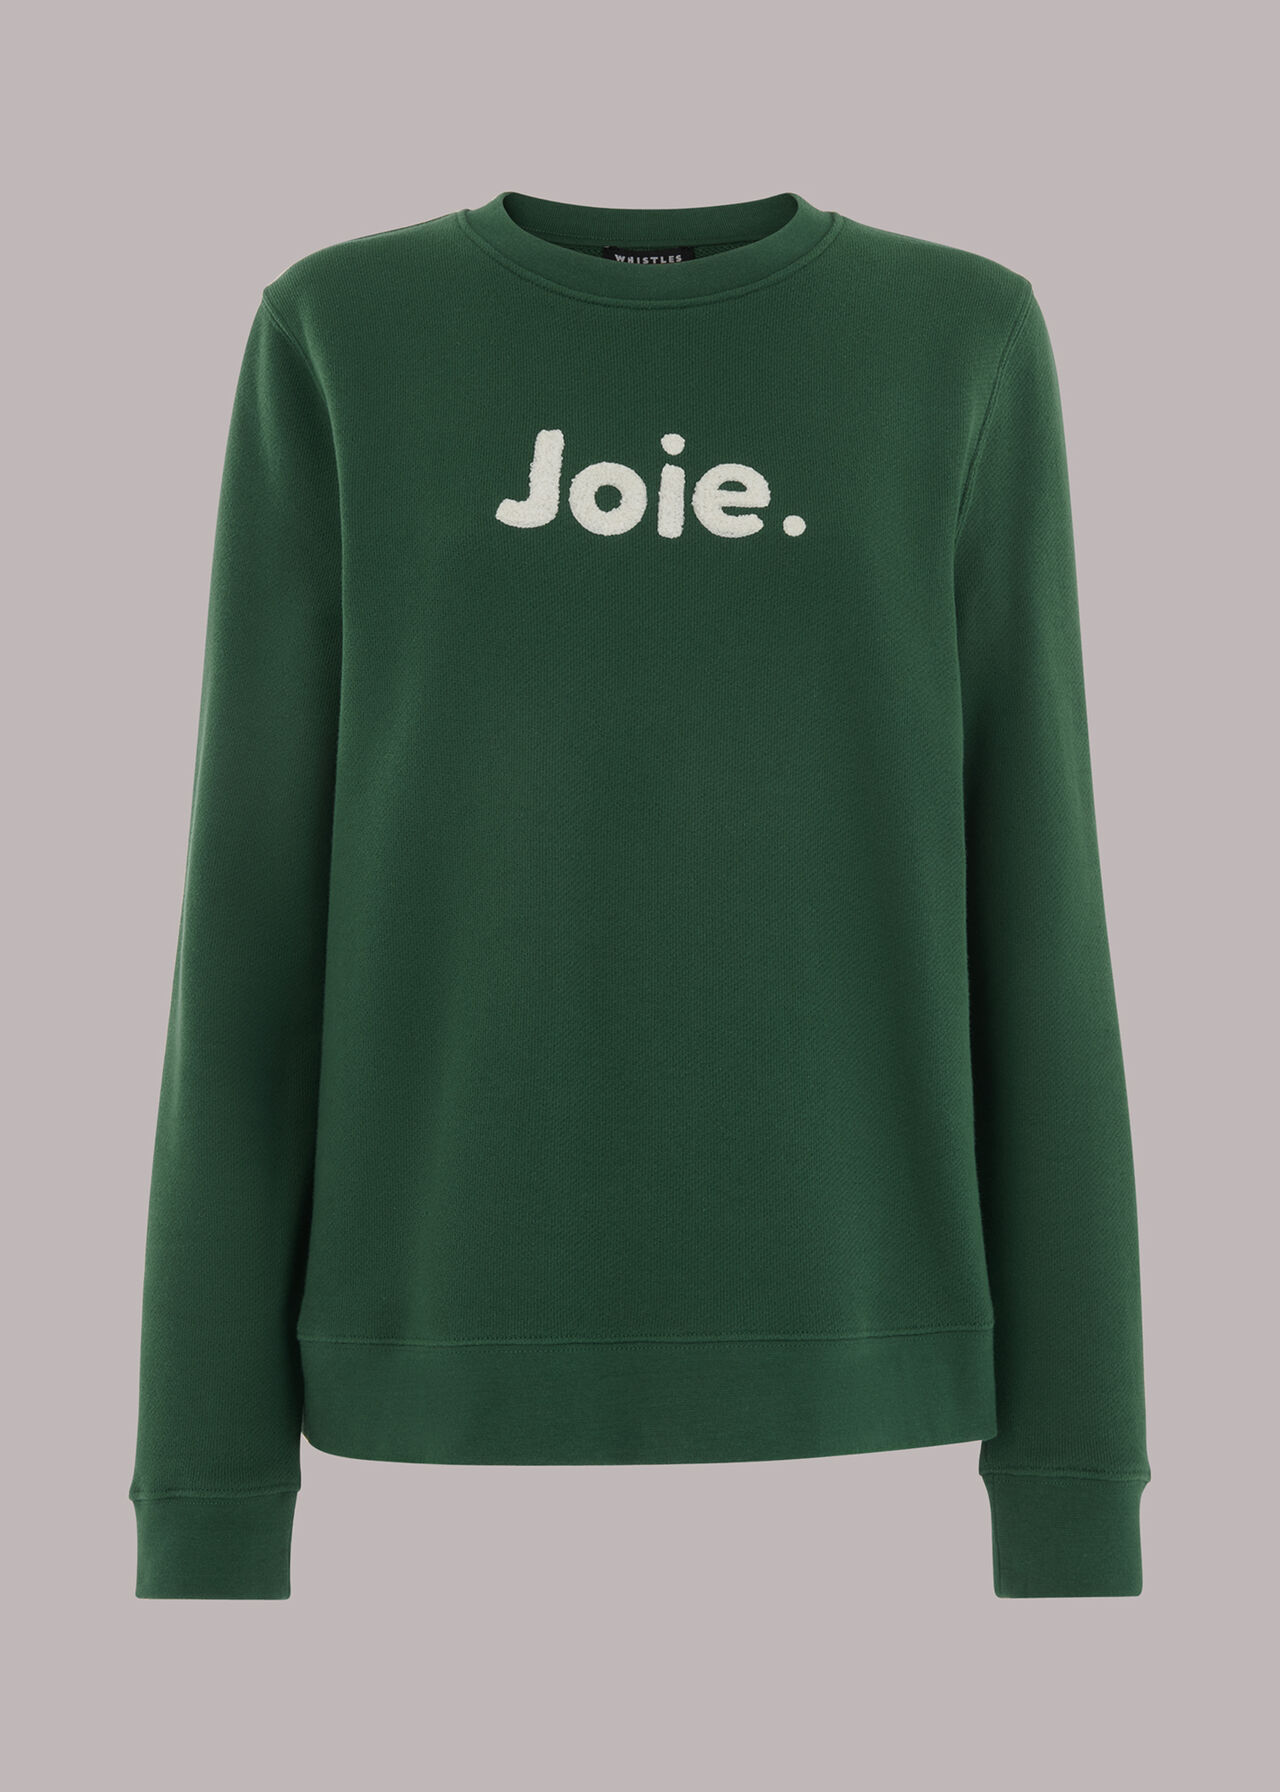 Joie Logo Sweatshirt